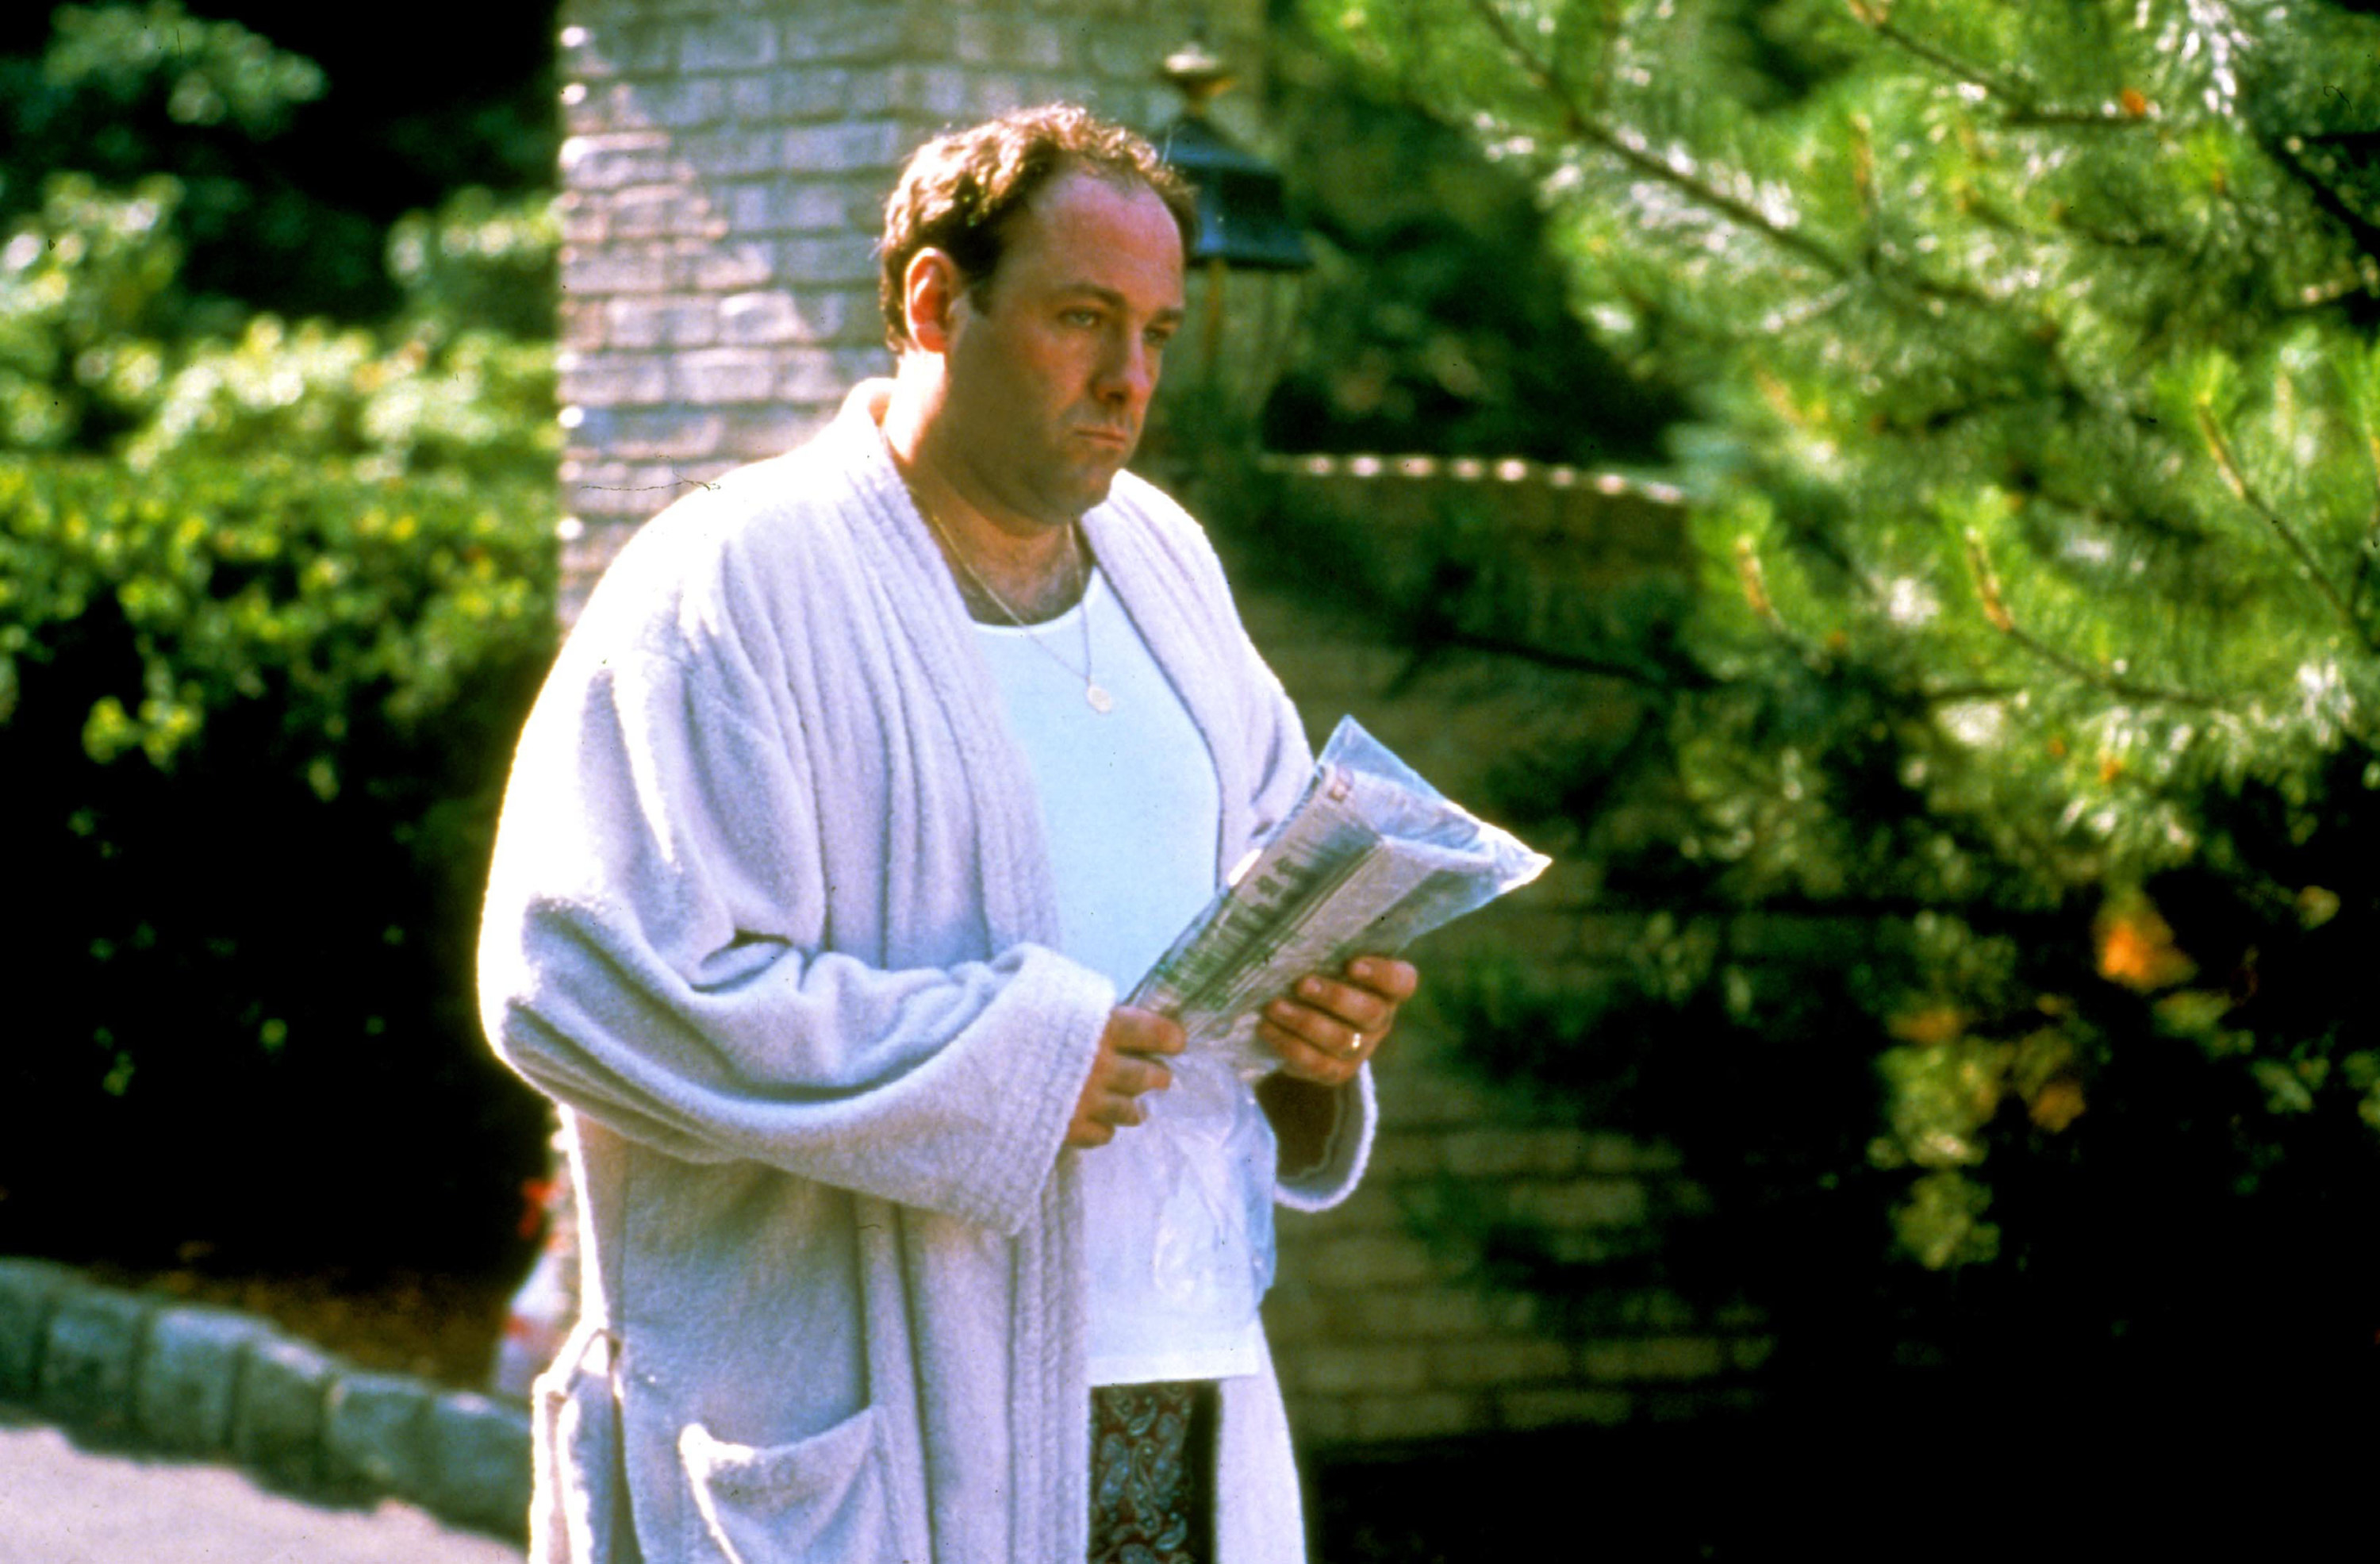 Tony Soprano walking in a bathrobe in &quot;The Sopranos&quot;